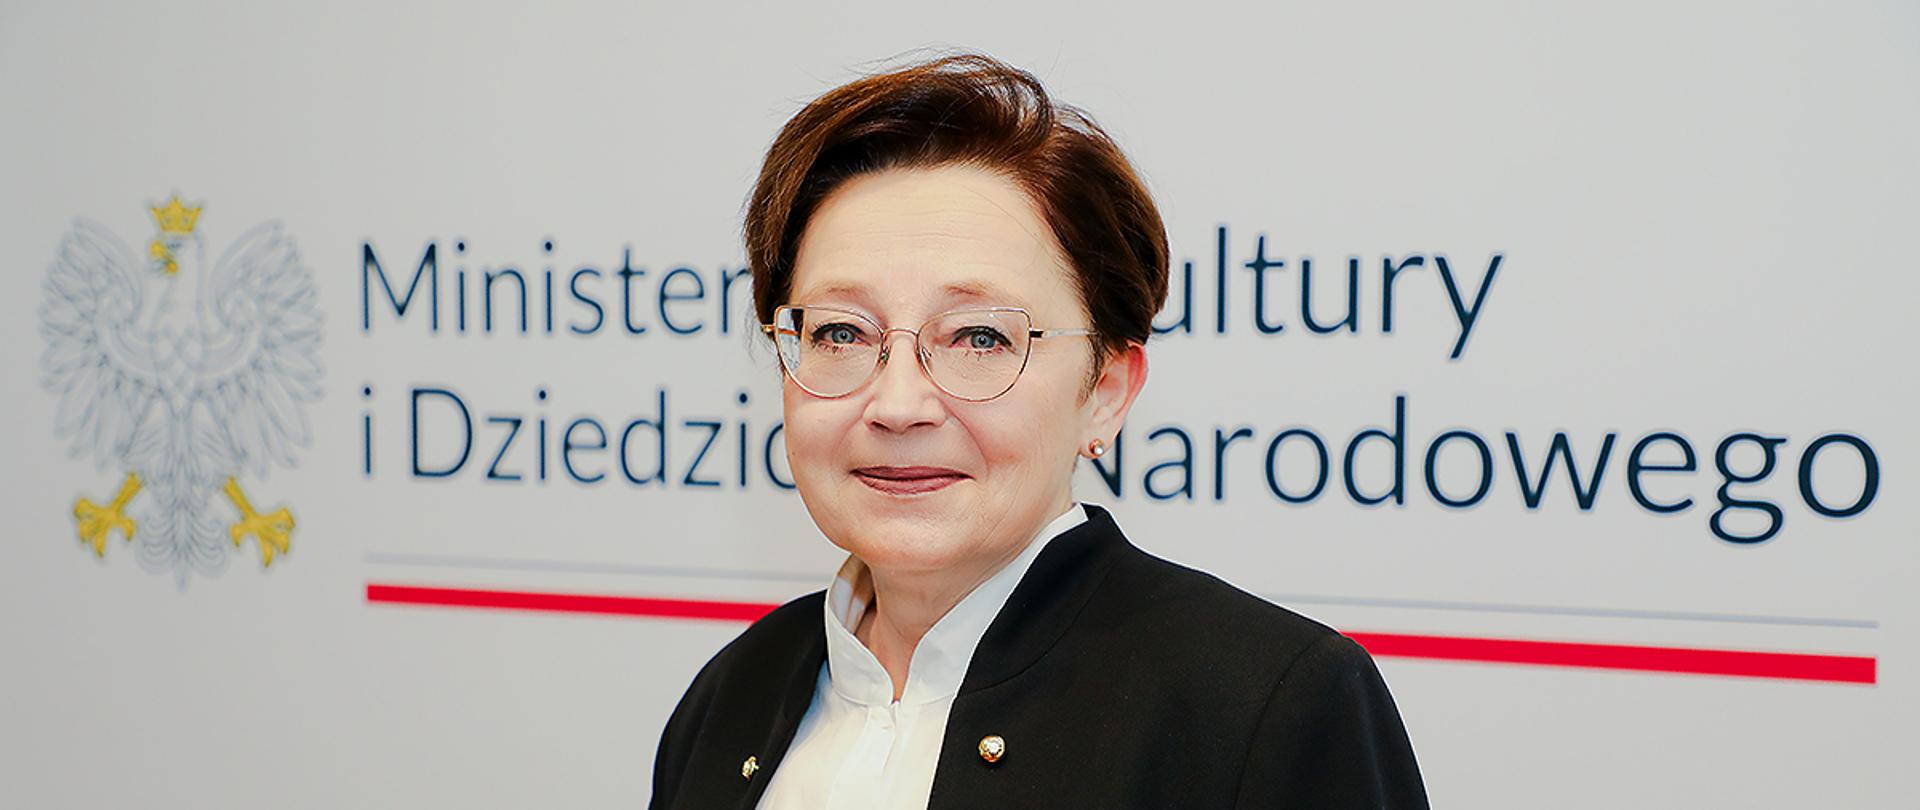 Dorota Żebrowska - dyrektor generalna, fot. Danuta Matloch